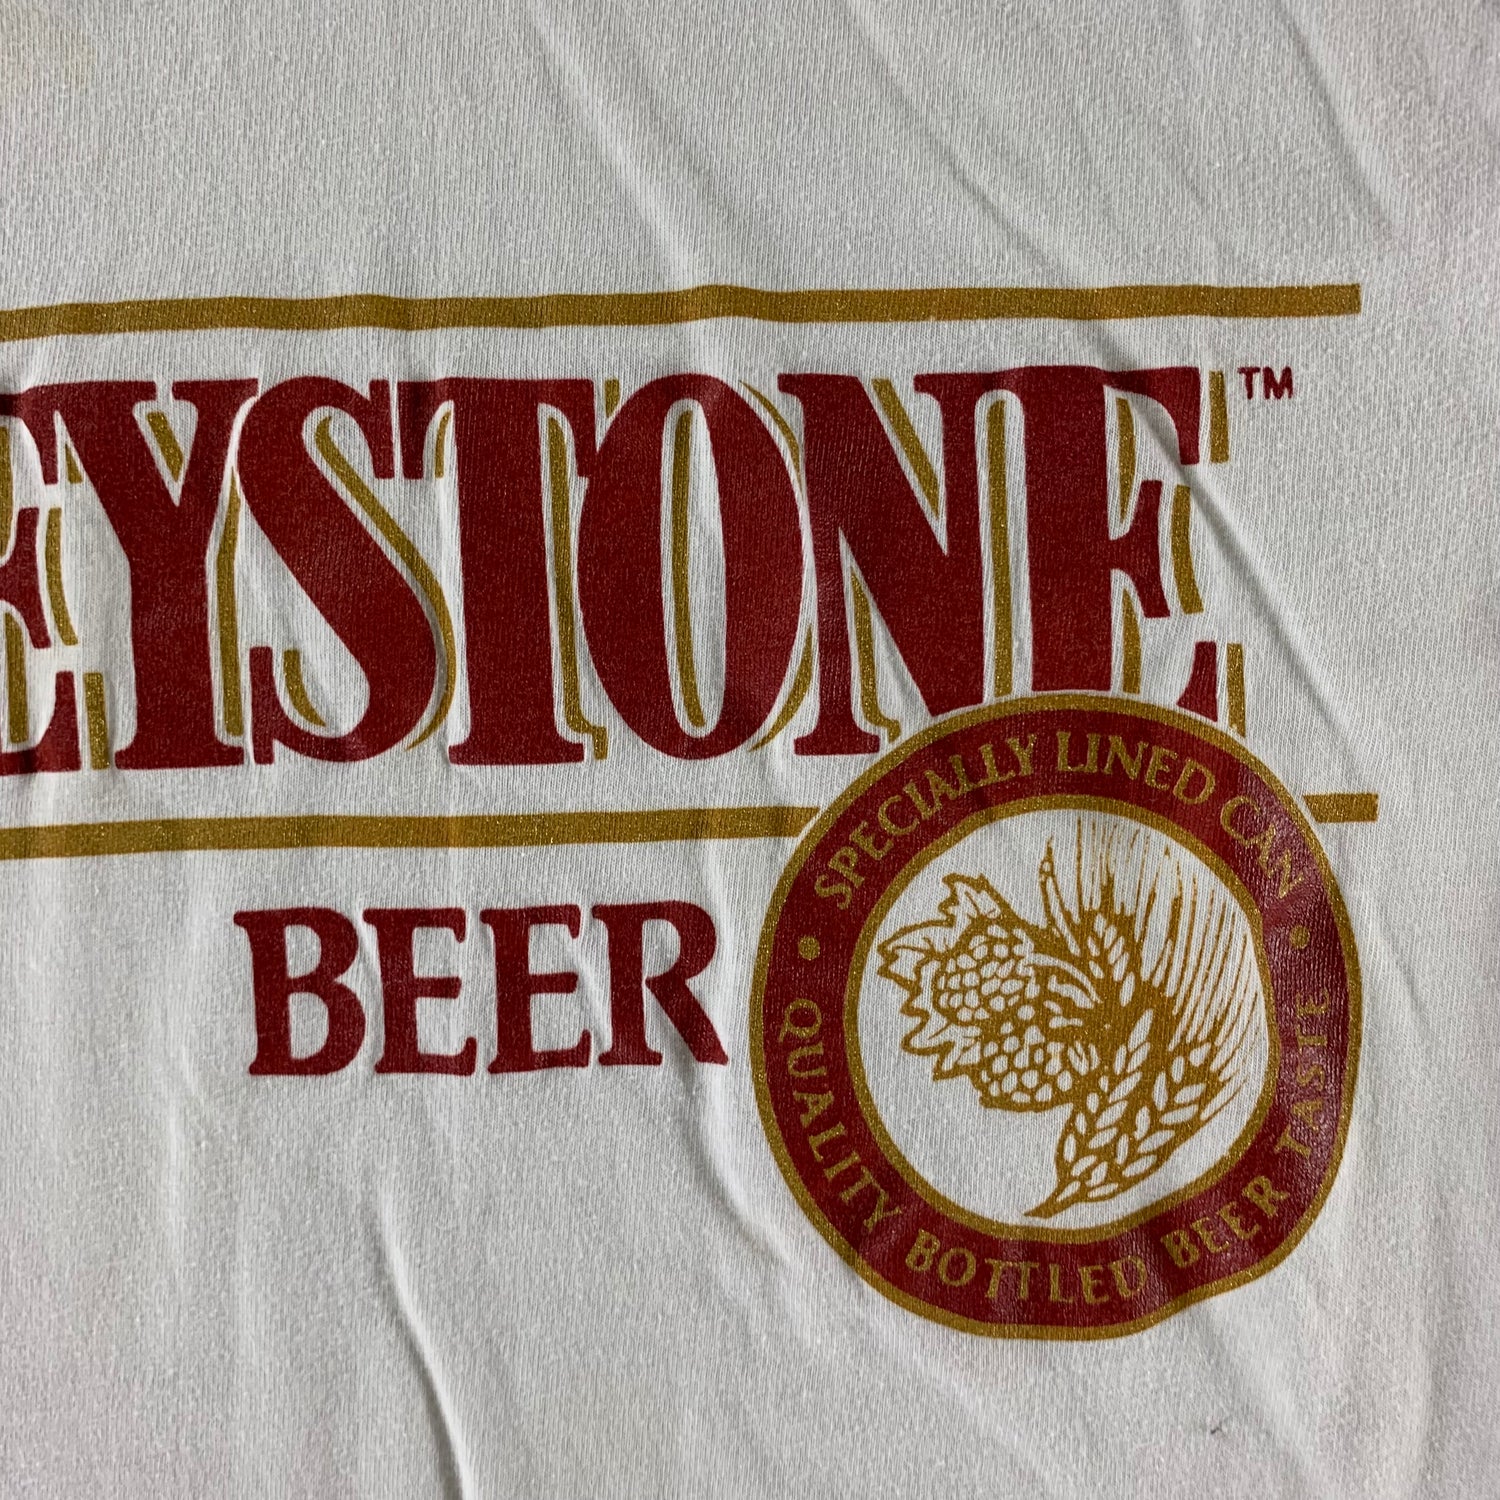 Vintage 1980s Keystone Beer T-shirt size Large